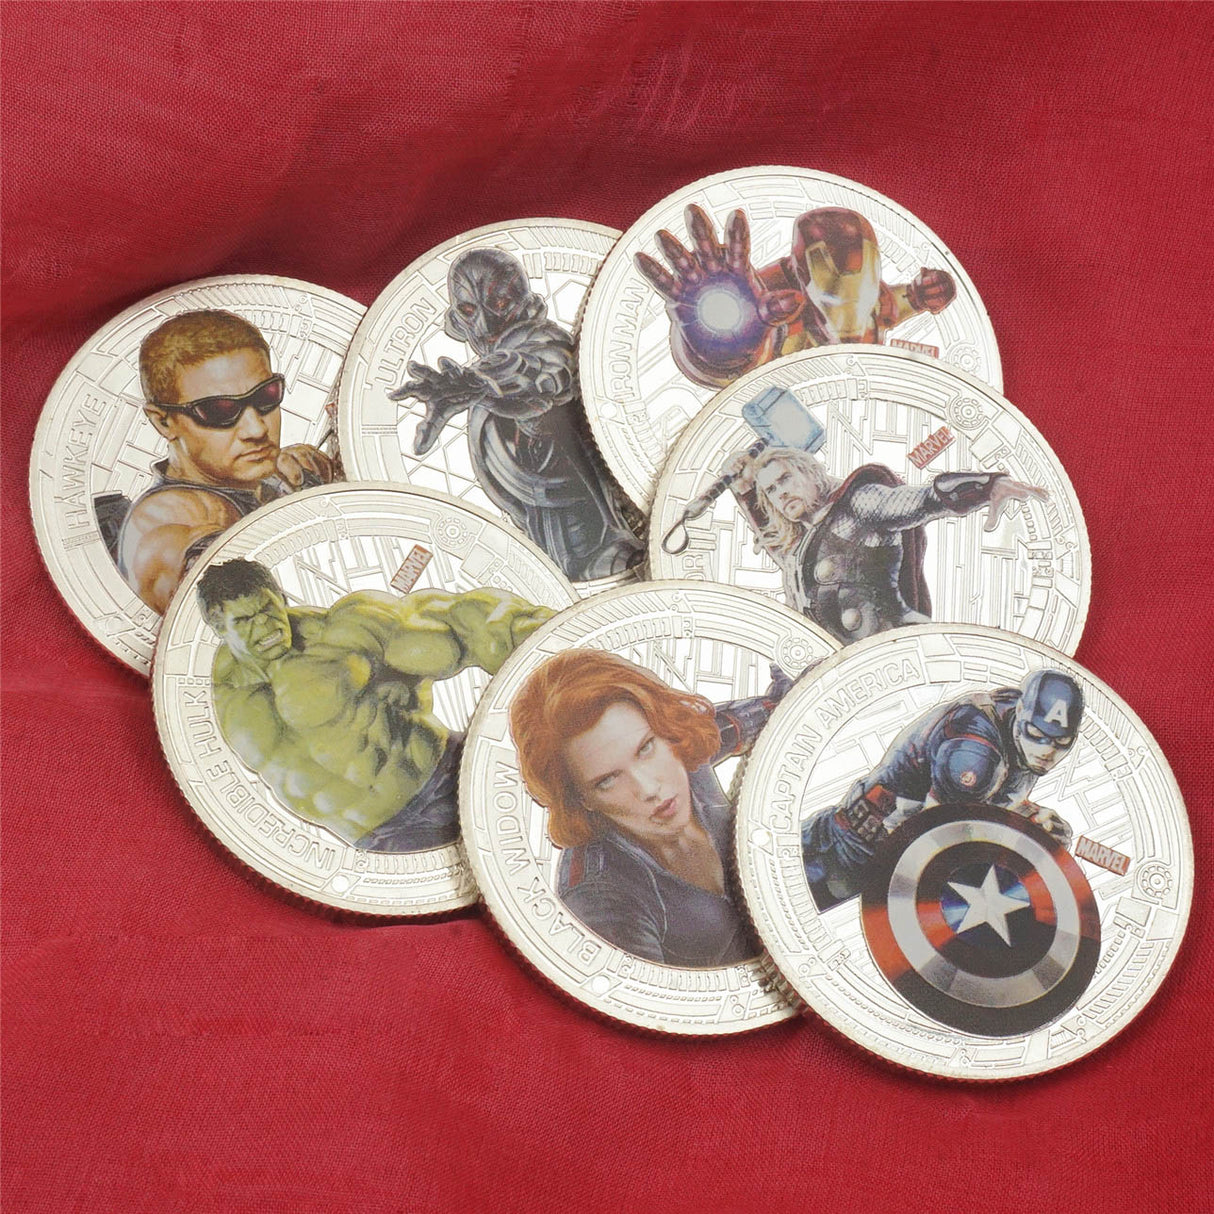 The Avengers Superhero Coin Set 2